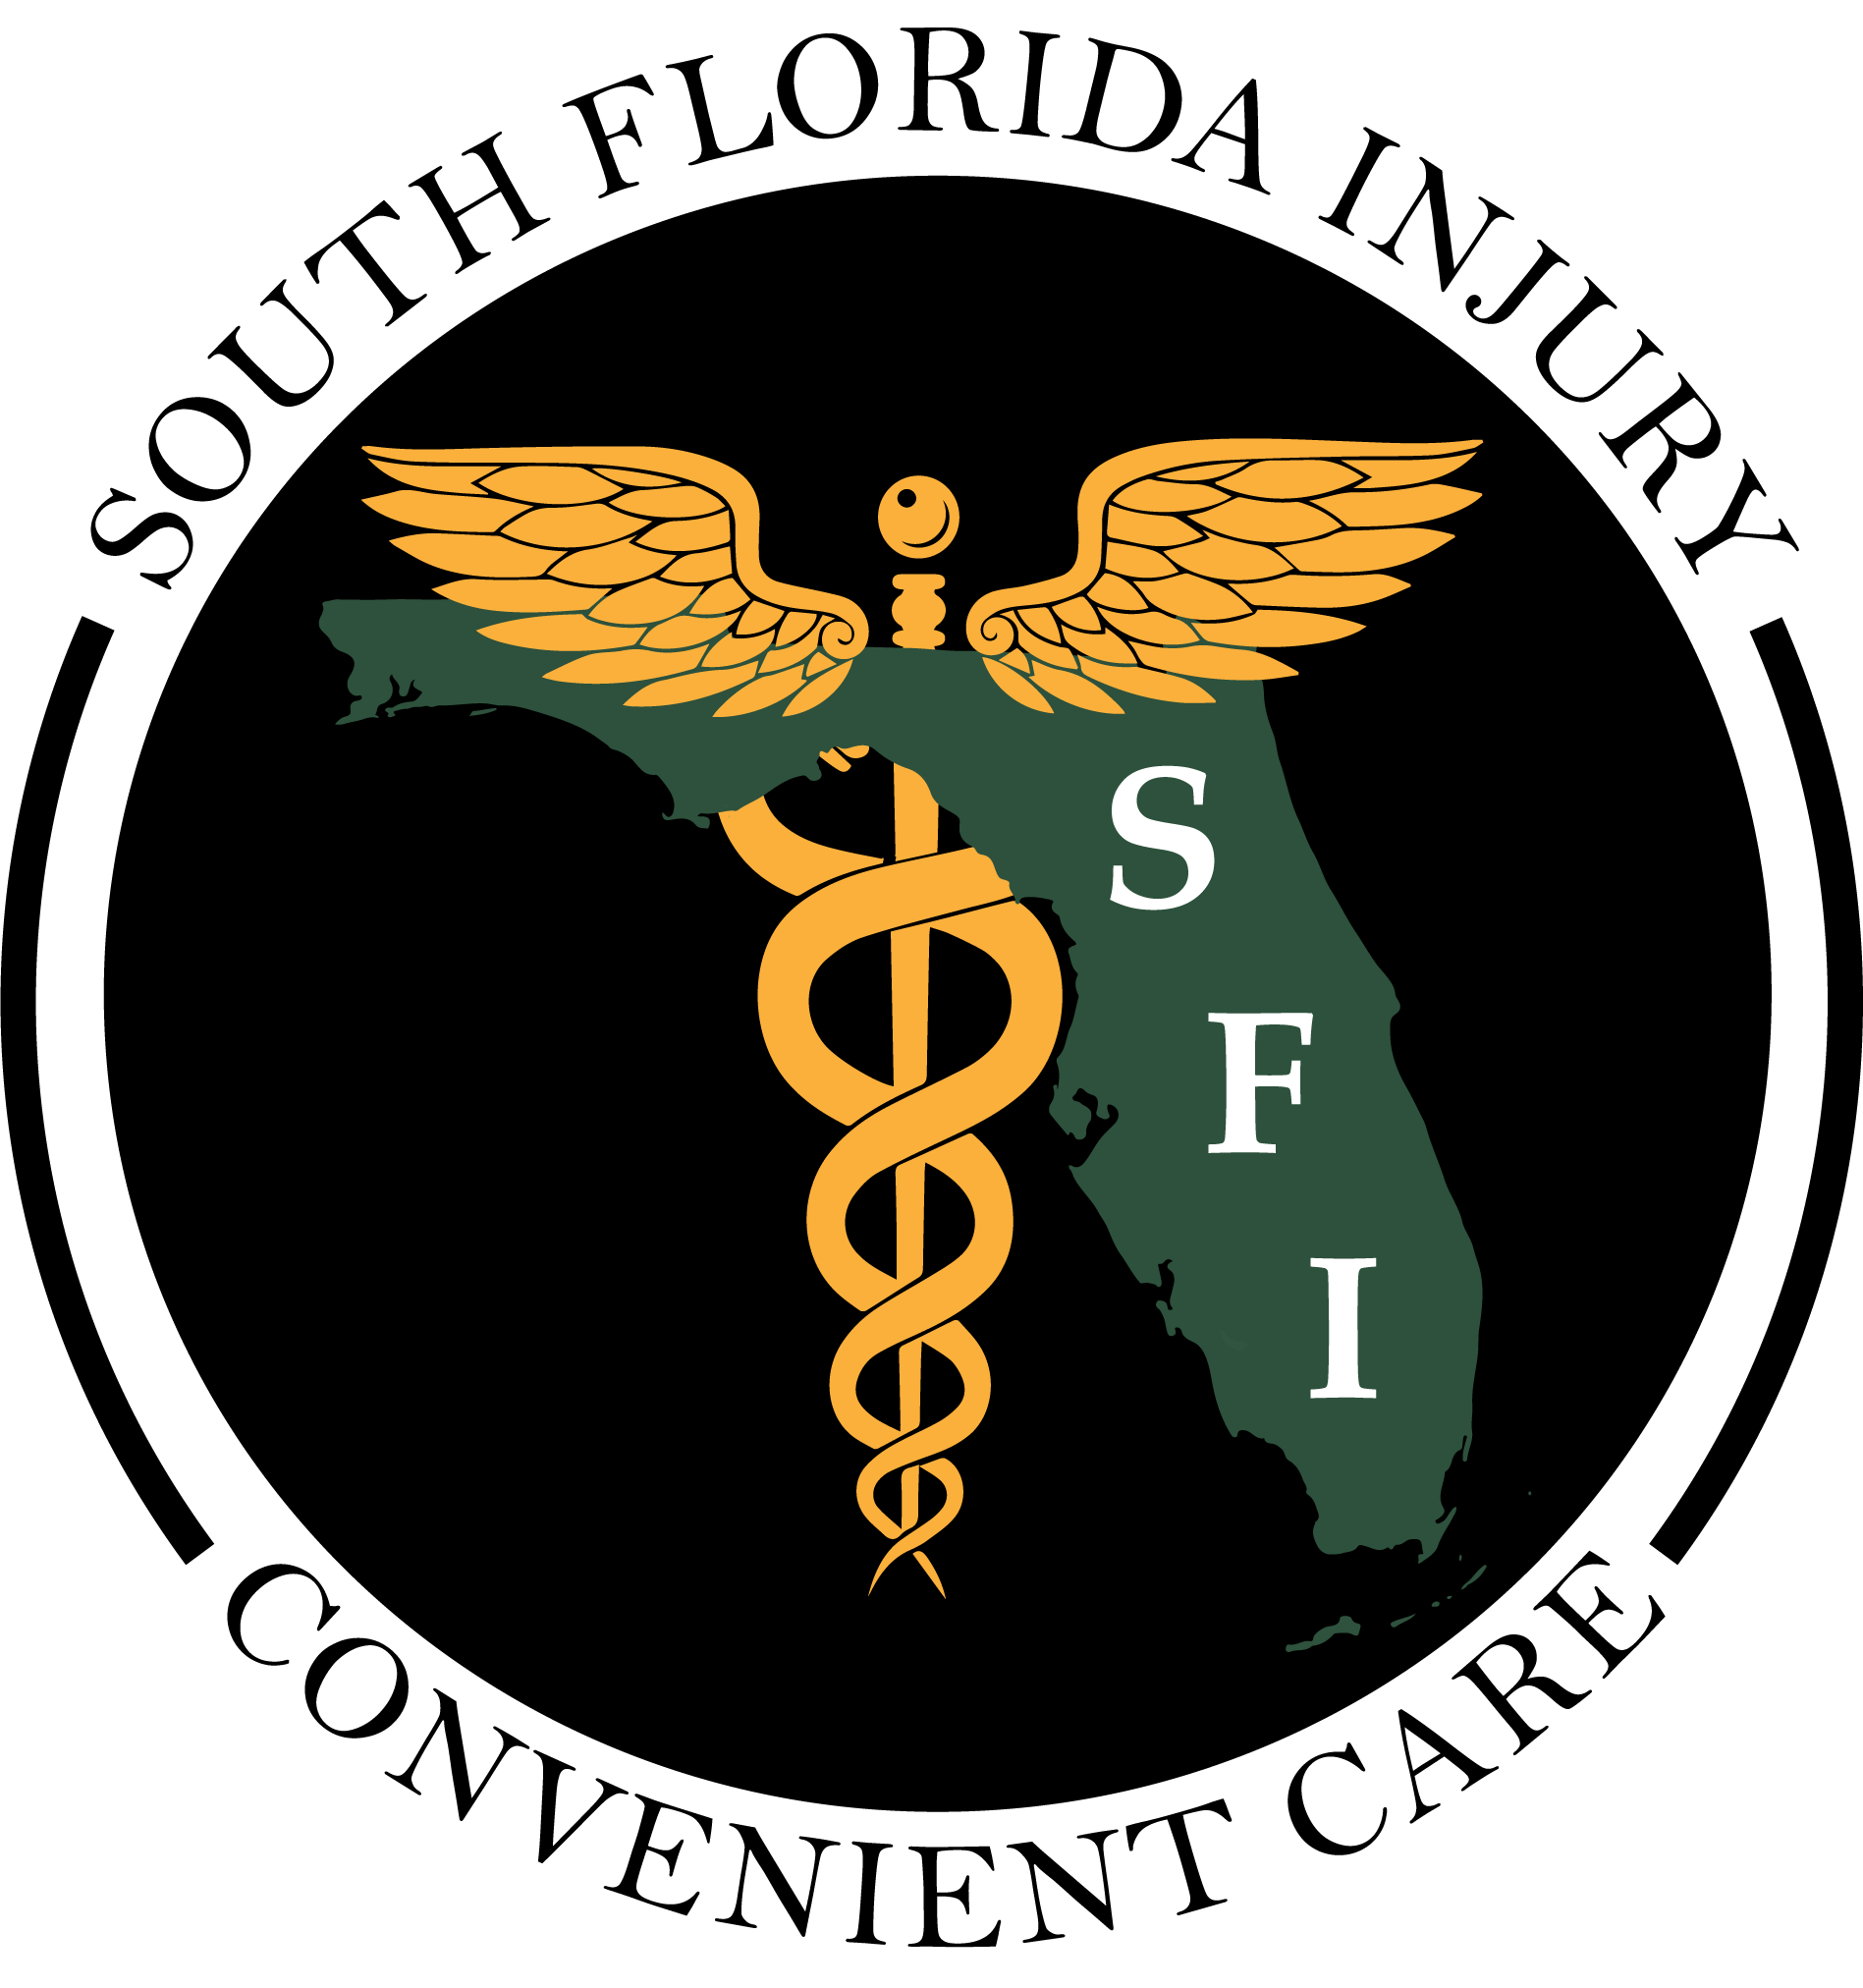 sficc, south Florida injury convenient care